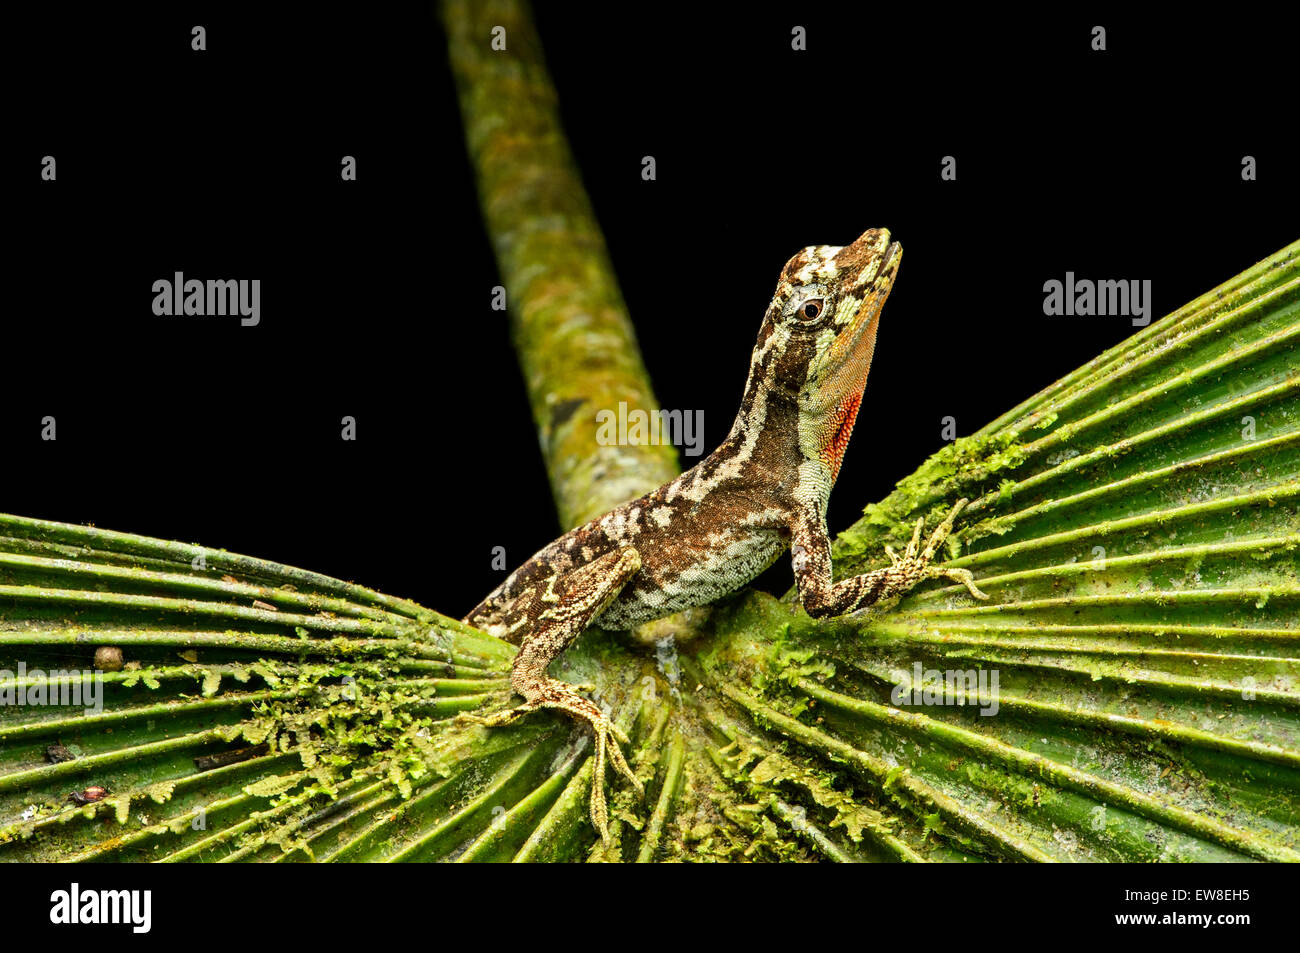 Male Anole lizard (Anolis lyra), Iguana family (Iguanidae), Chocó rainforest, Ecuador Stock Photo